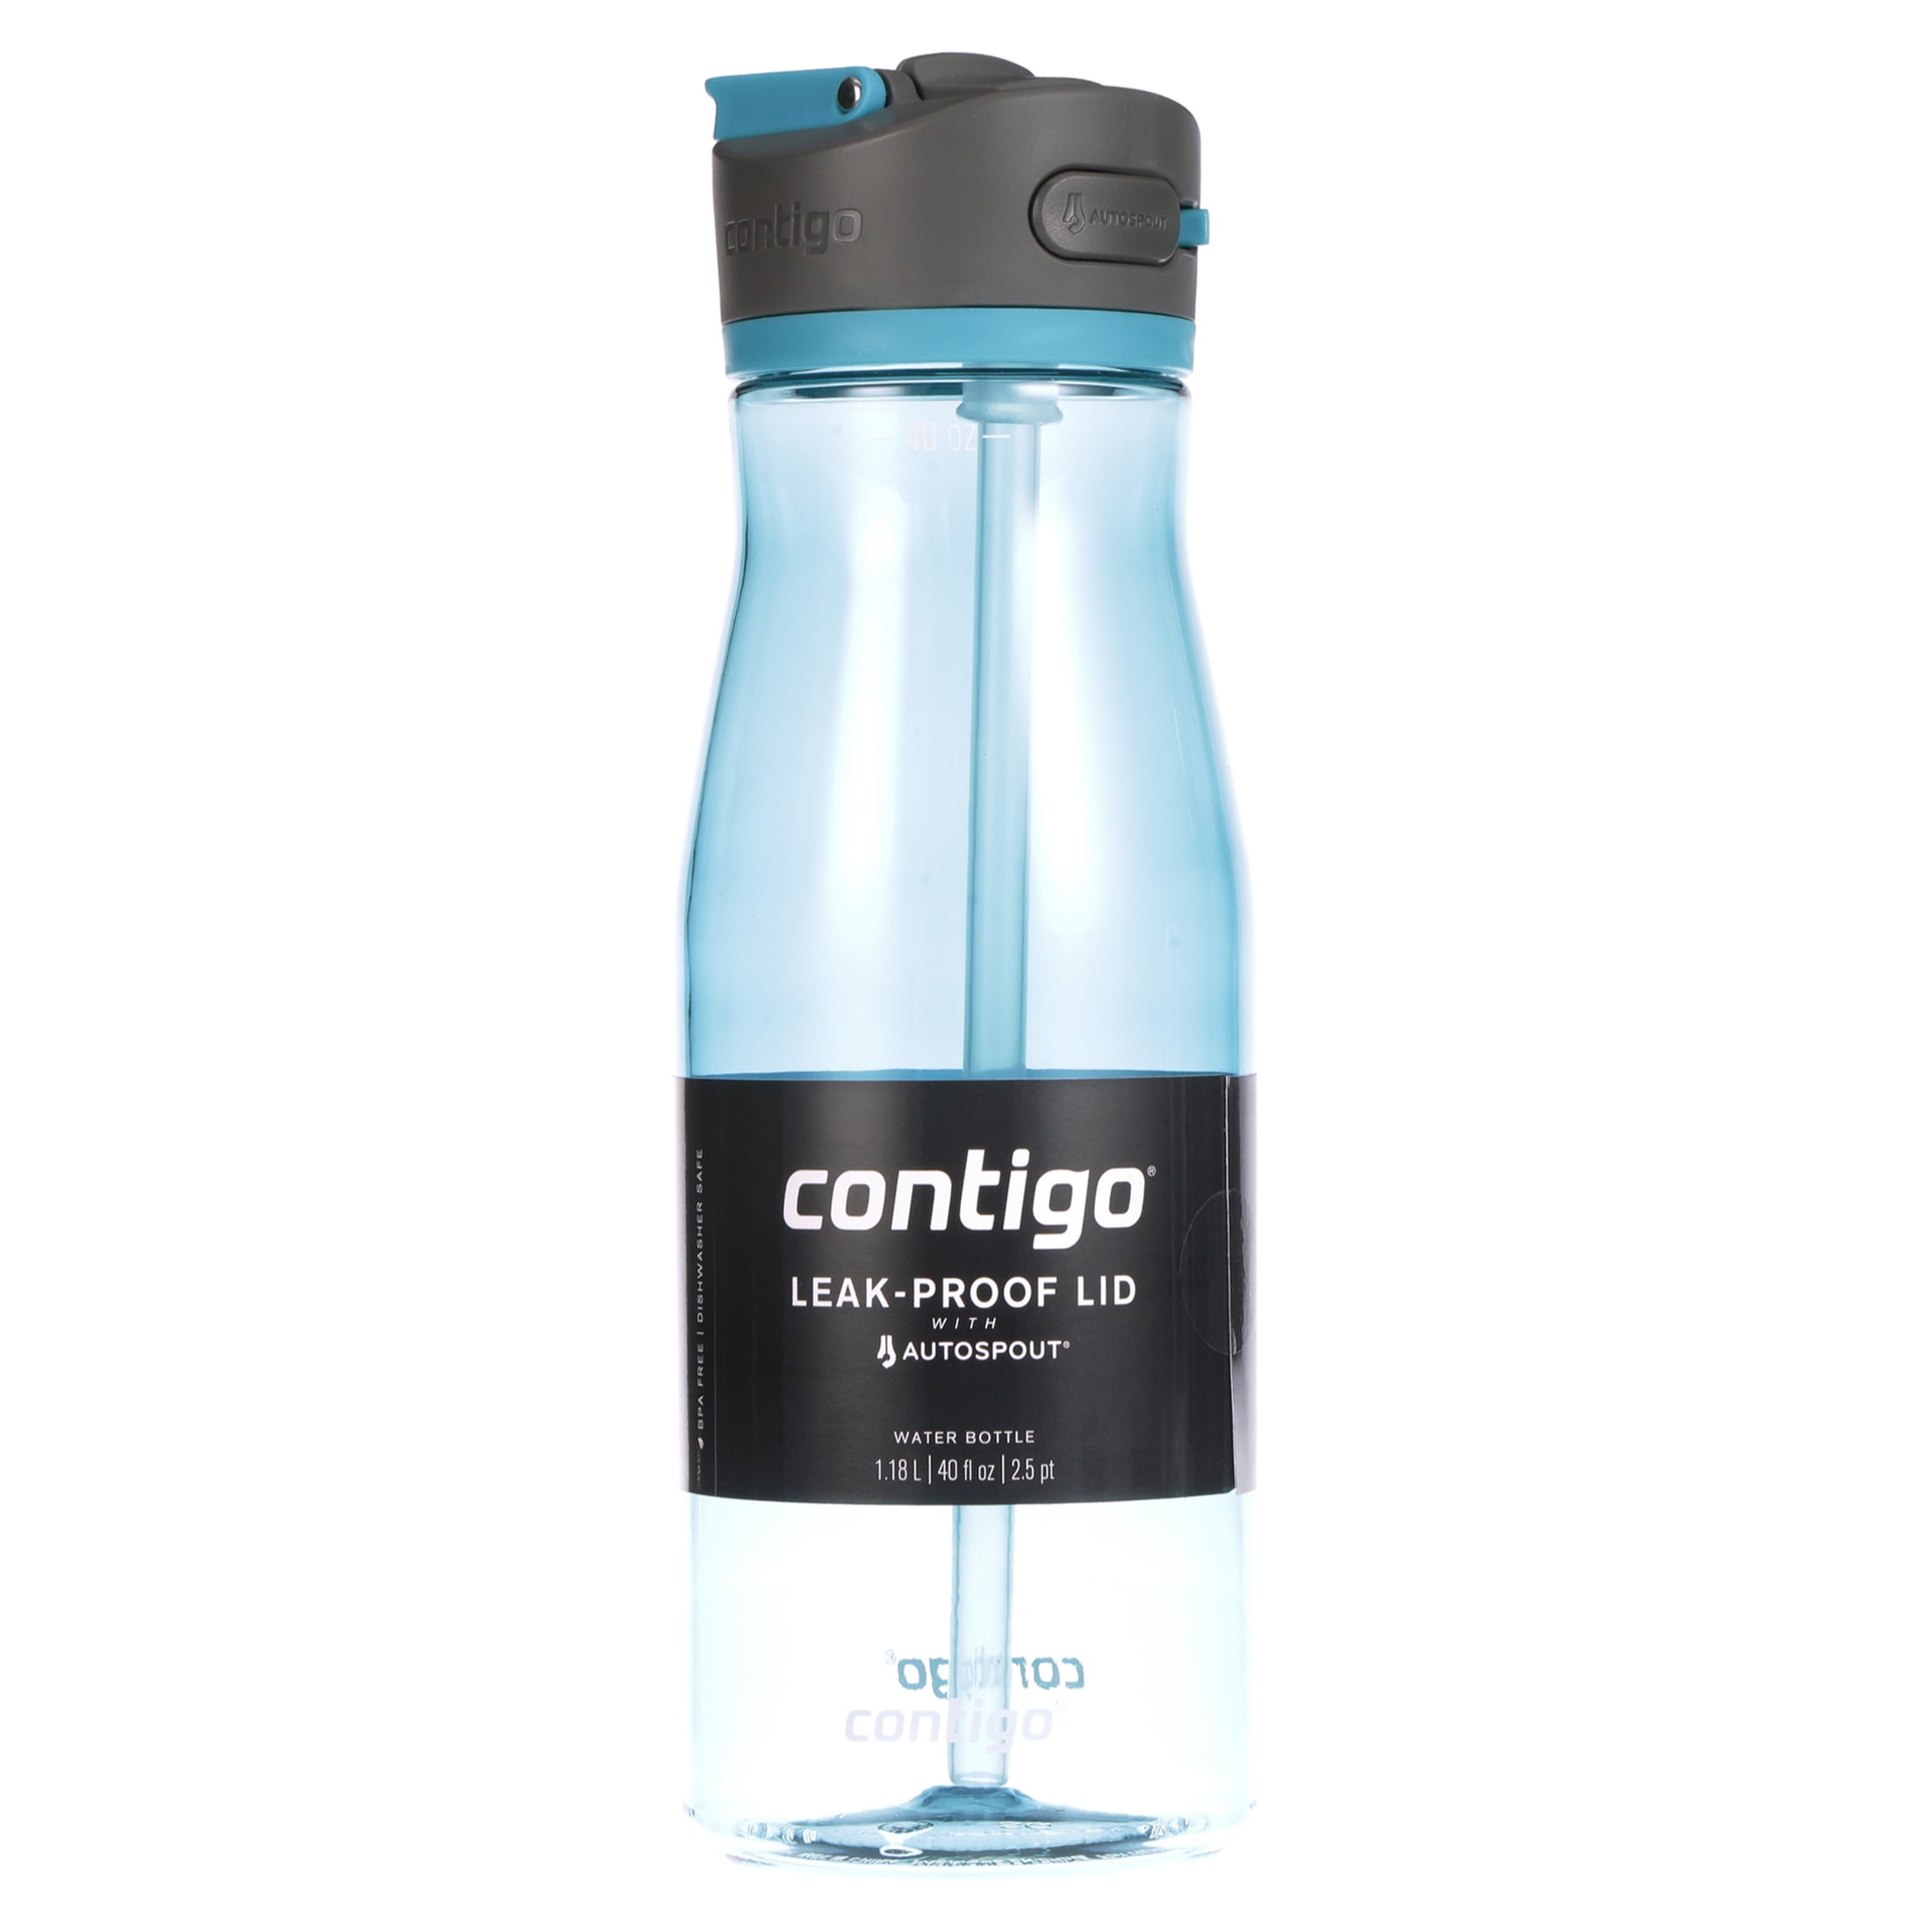 Buy Contigo Autospout Addison/Waveland/Sheffield Replacement Water